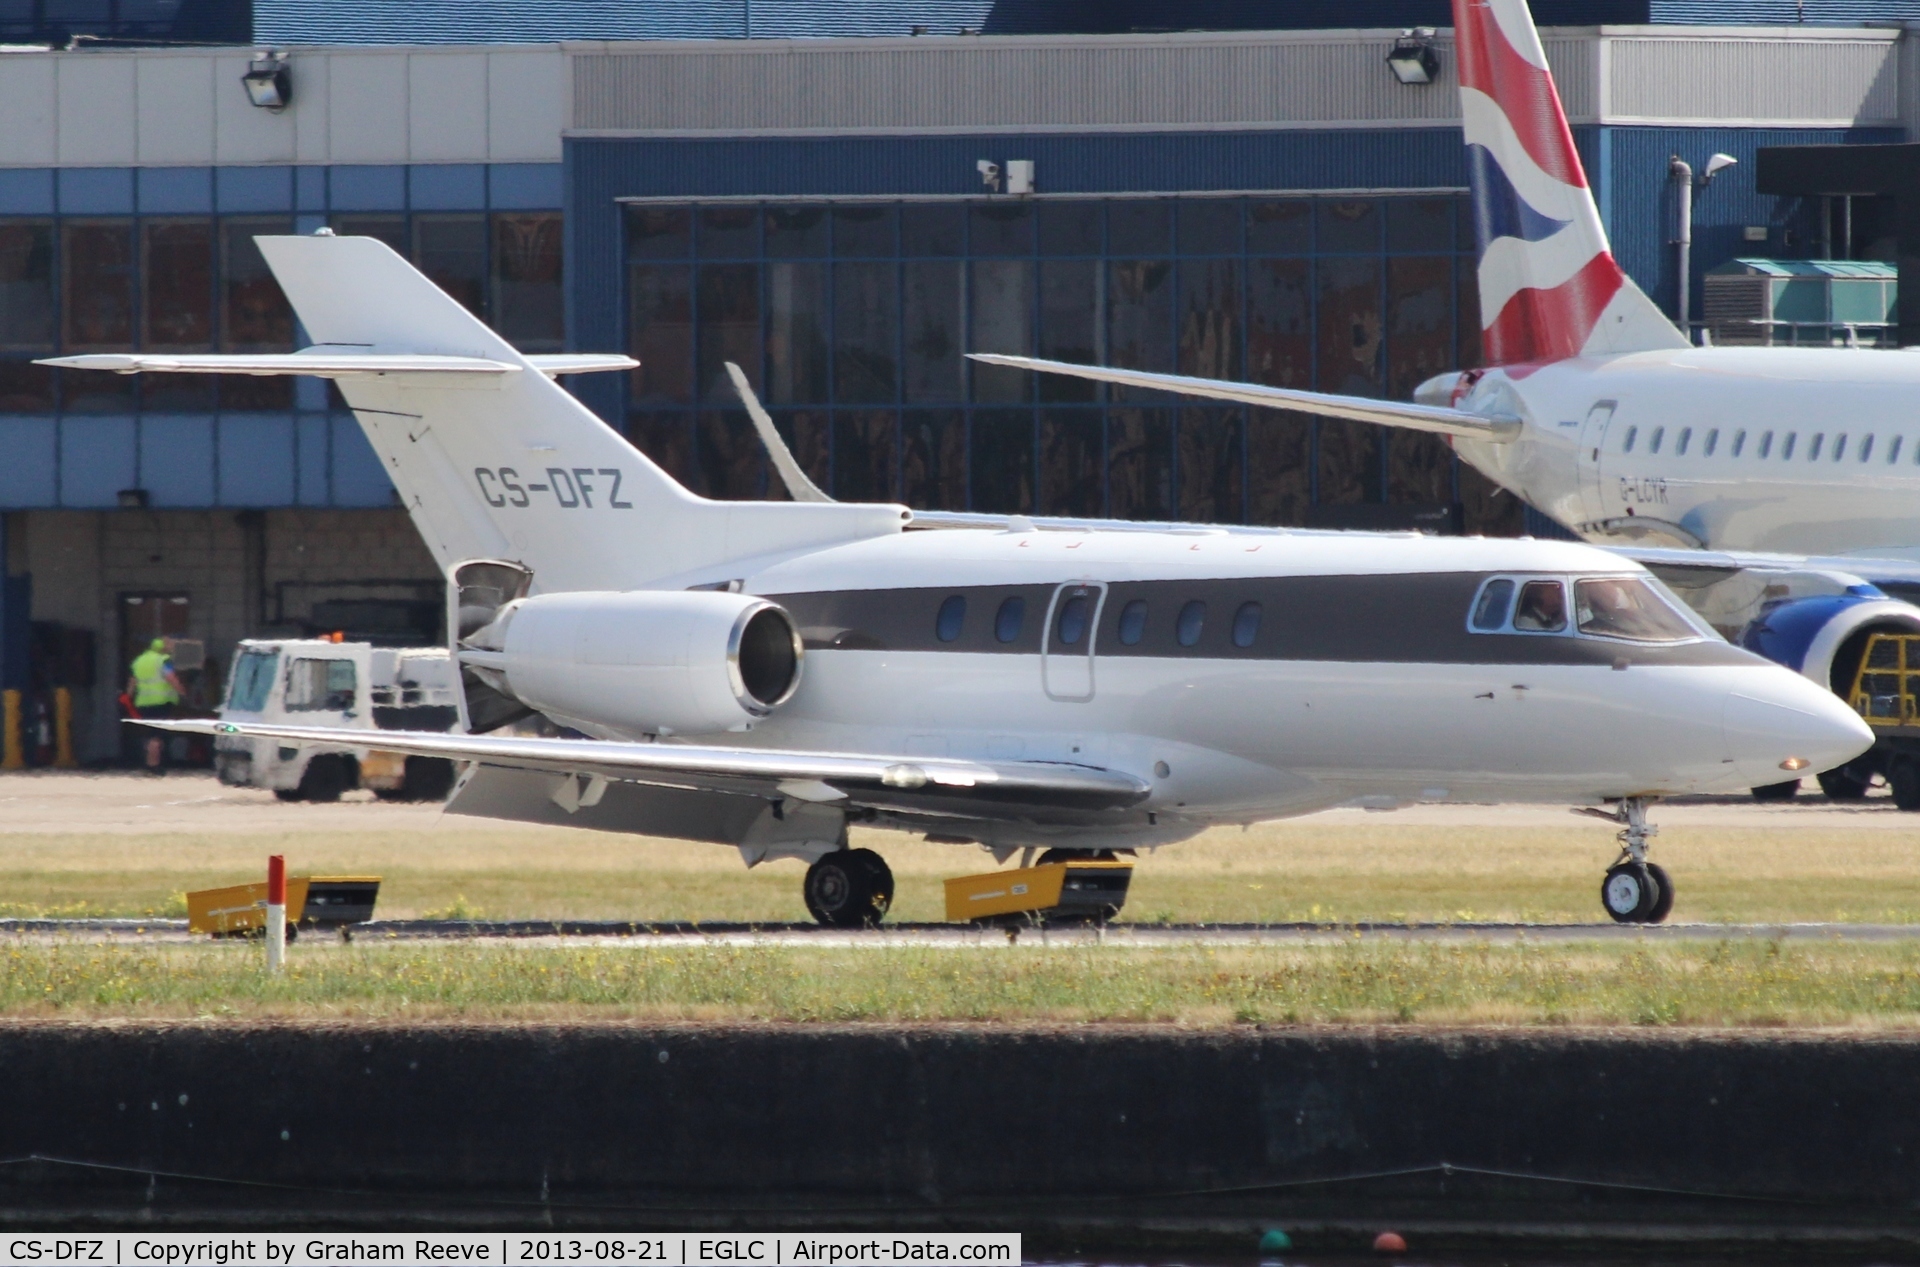 CS-DFZ, 2004 Raytheon Hawker 800XP C/N 258673, Just landed at London City.